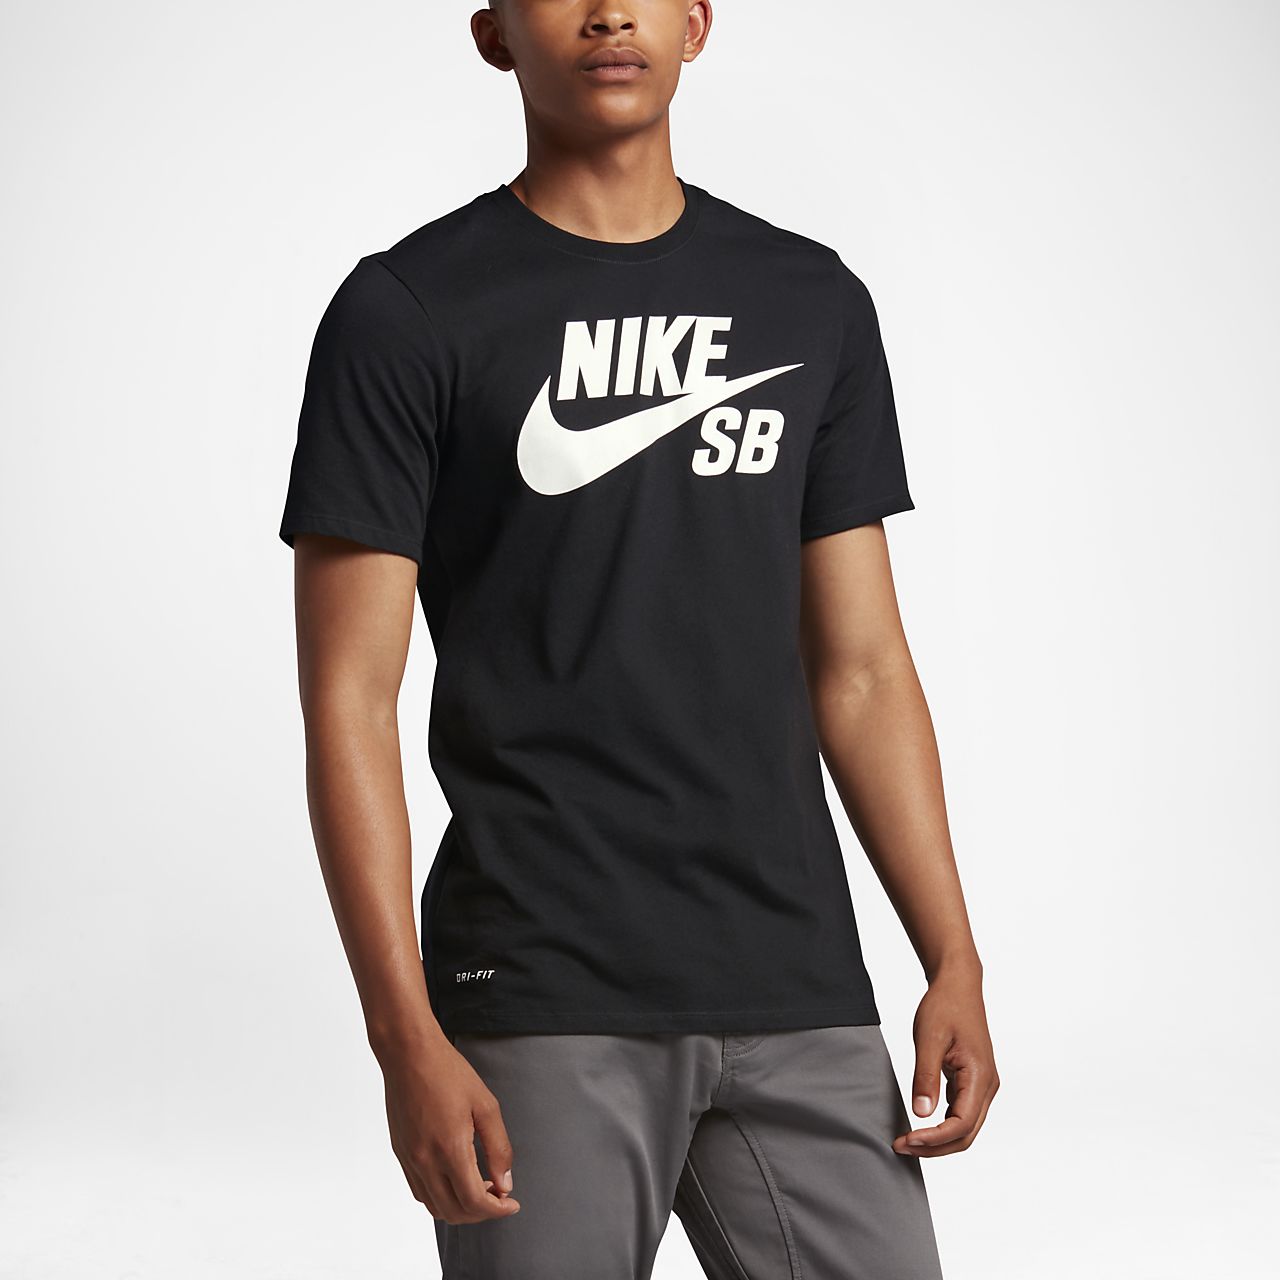 Футболки найк мужские купить. Nike SB футболка. Т-Shirt Nike. Nike SB майка. Футболка Nike SB мужские черная.